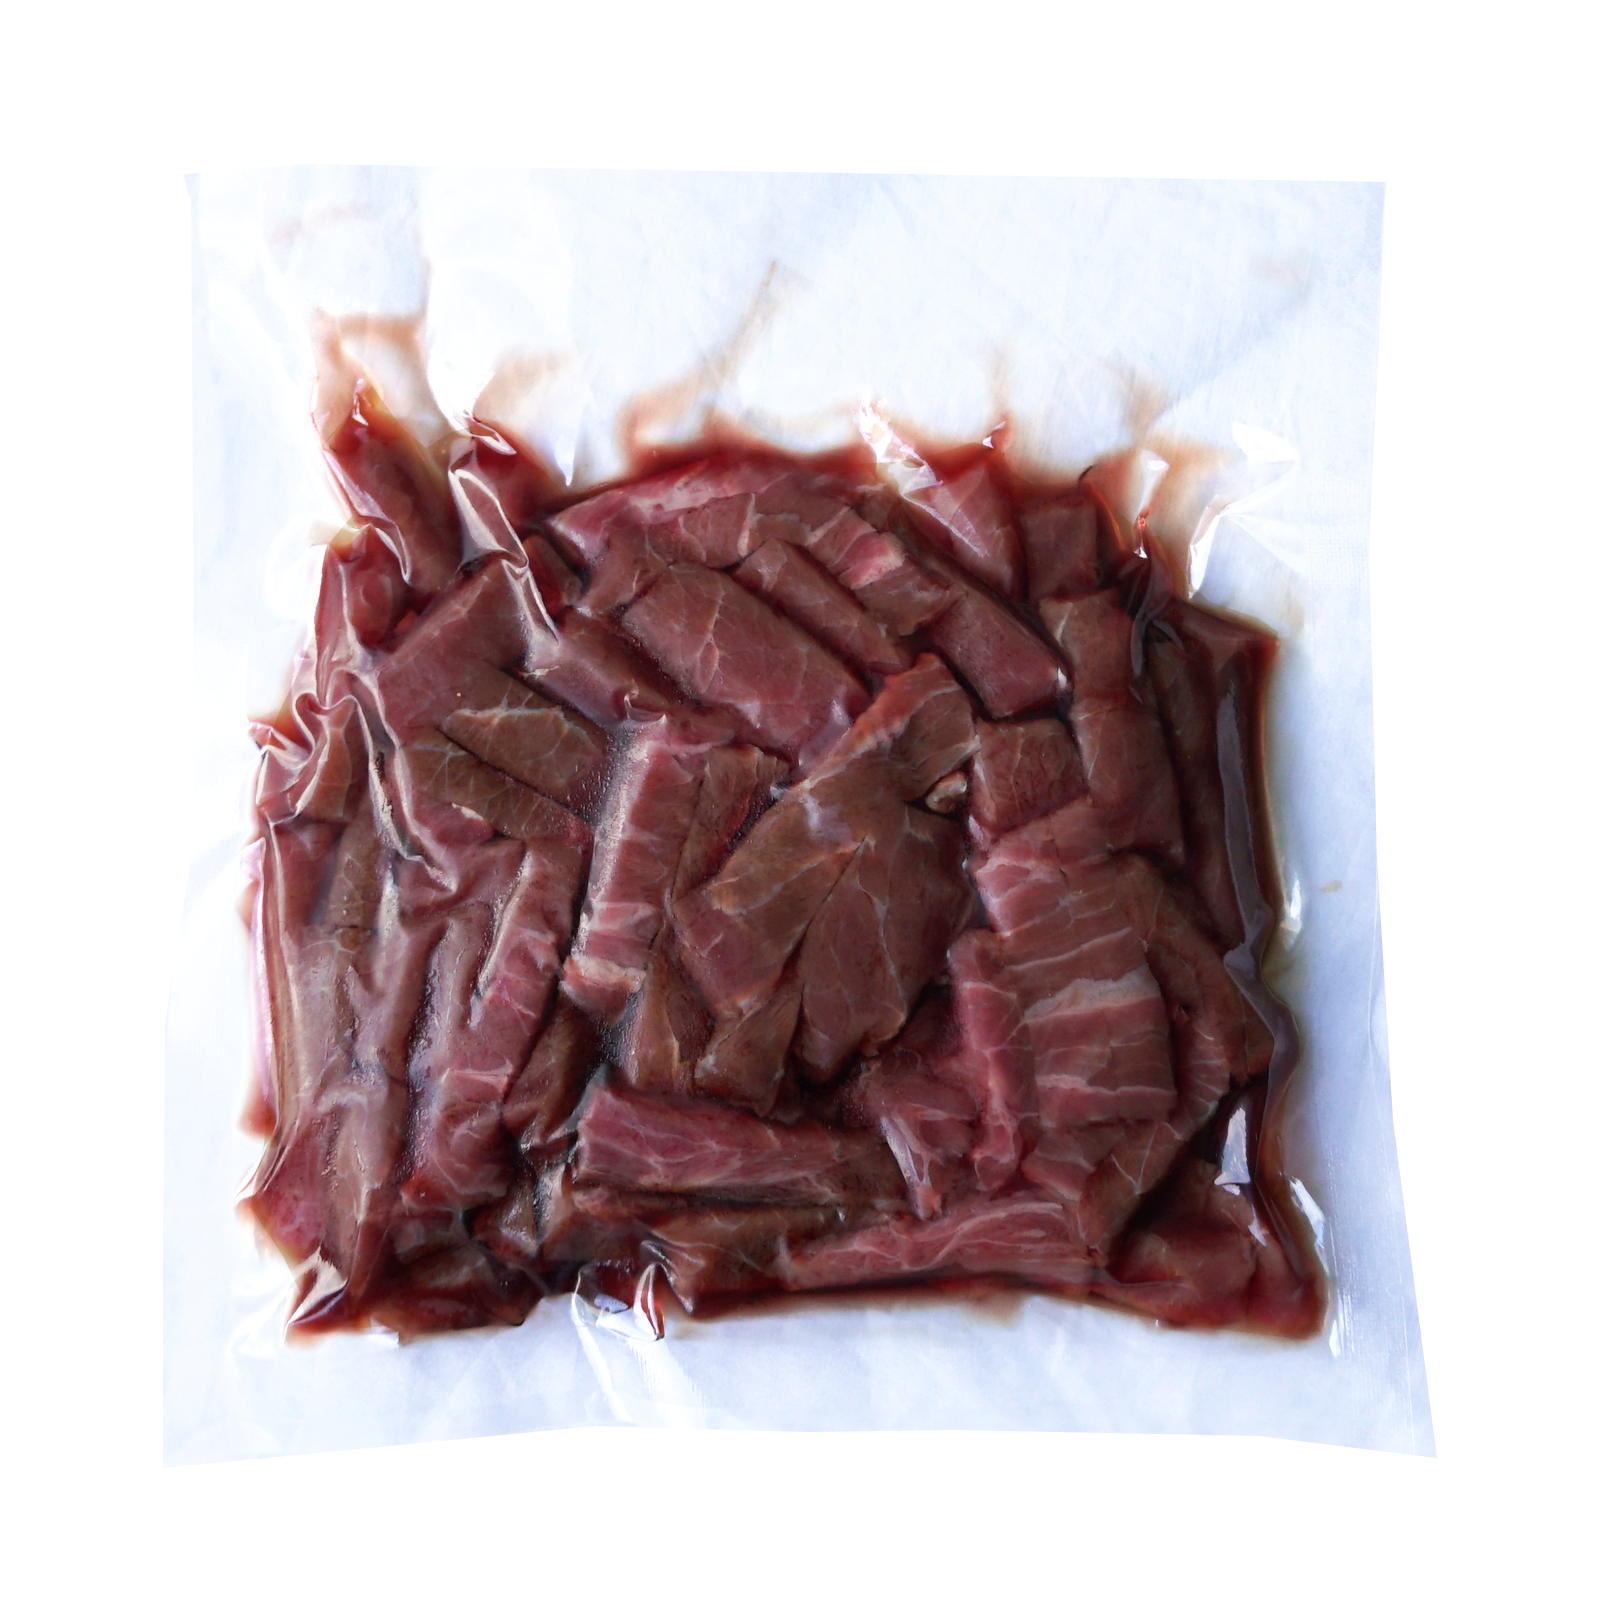 Grass-Fed Beef Rump Stir-Fry Cuts from Poland (300g) - Horizon Farms